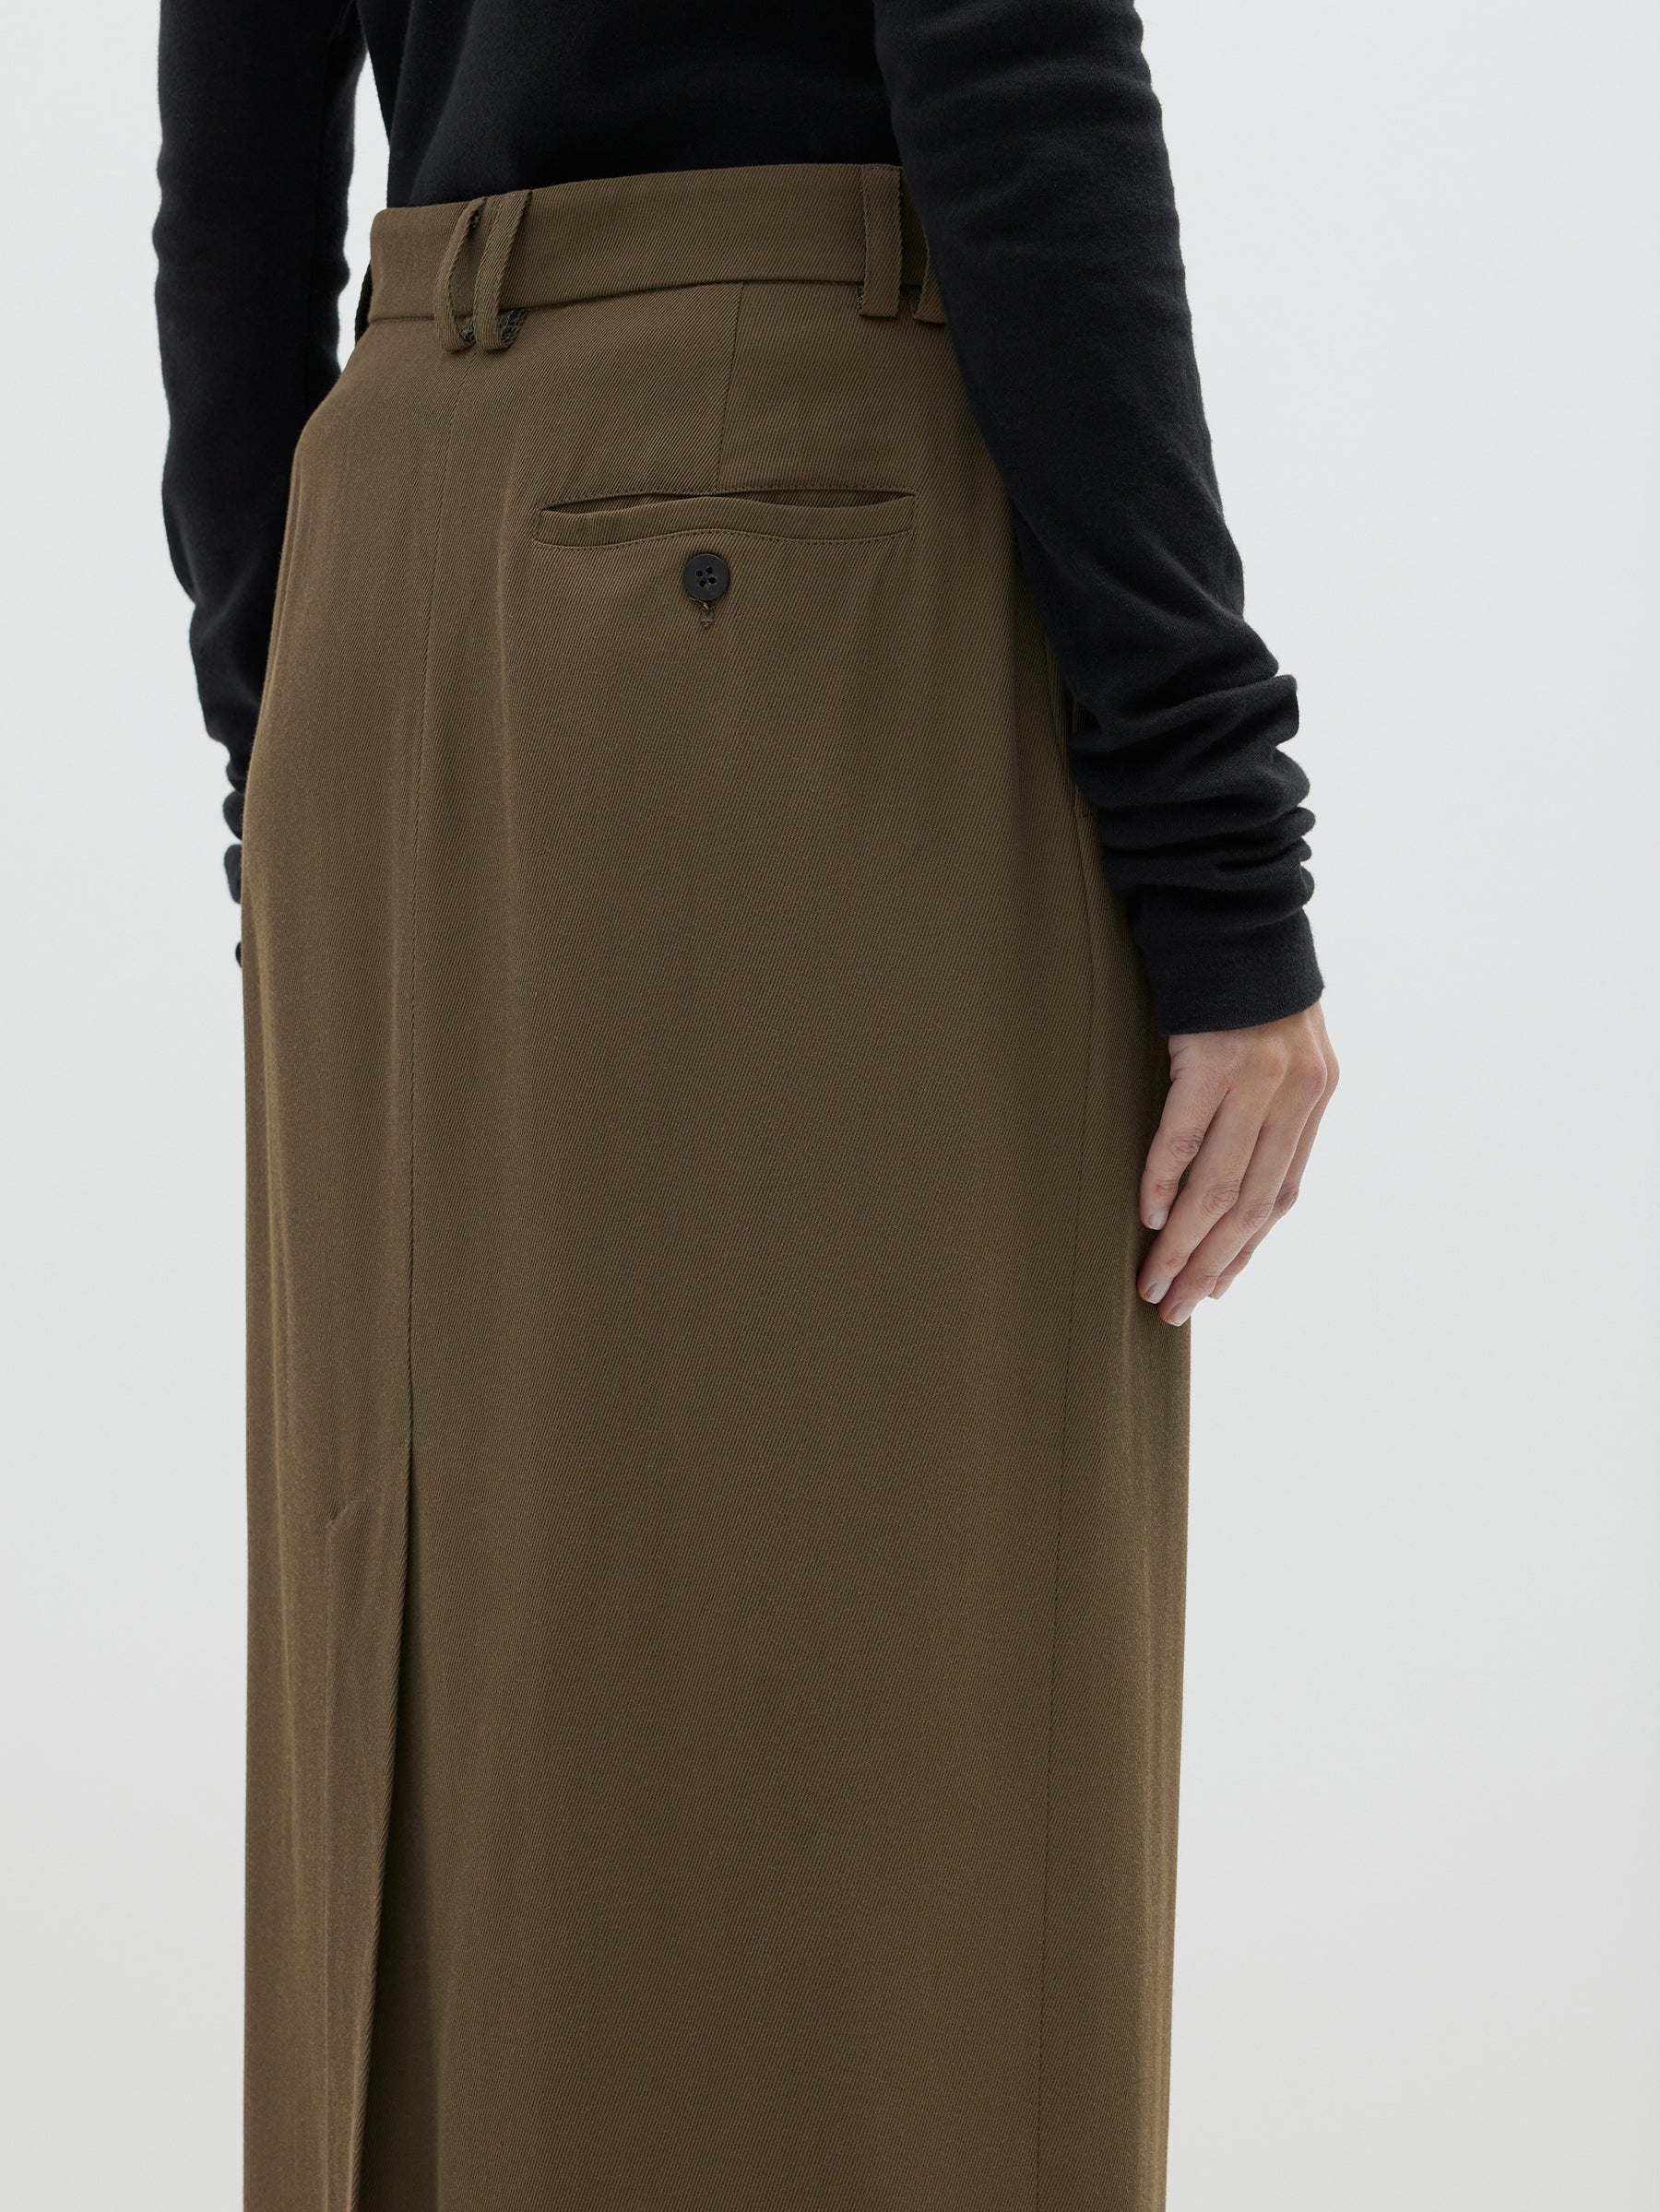 23aw Wool twill skirt - スカート